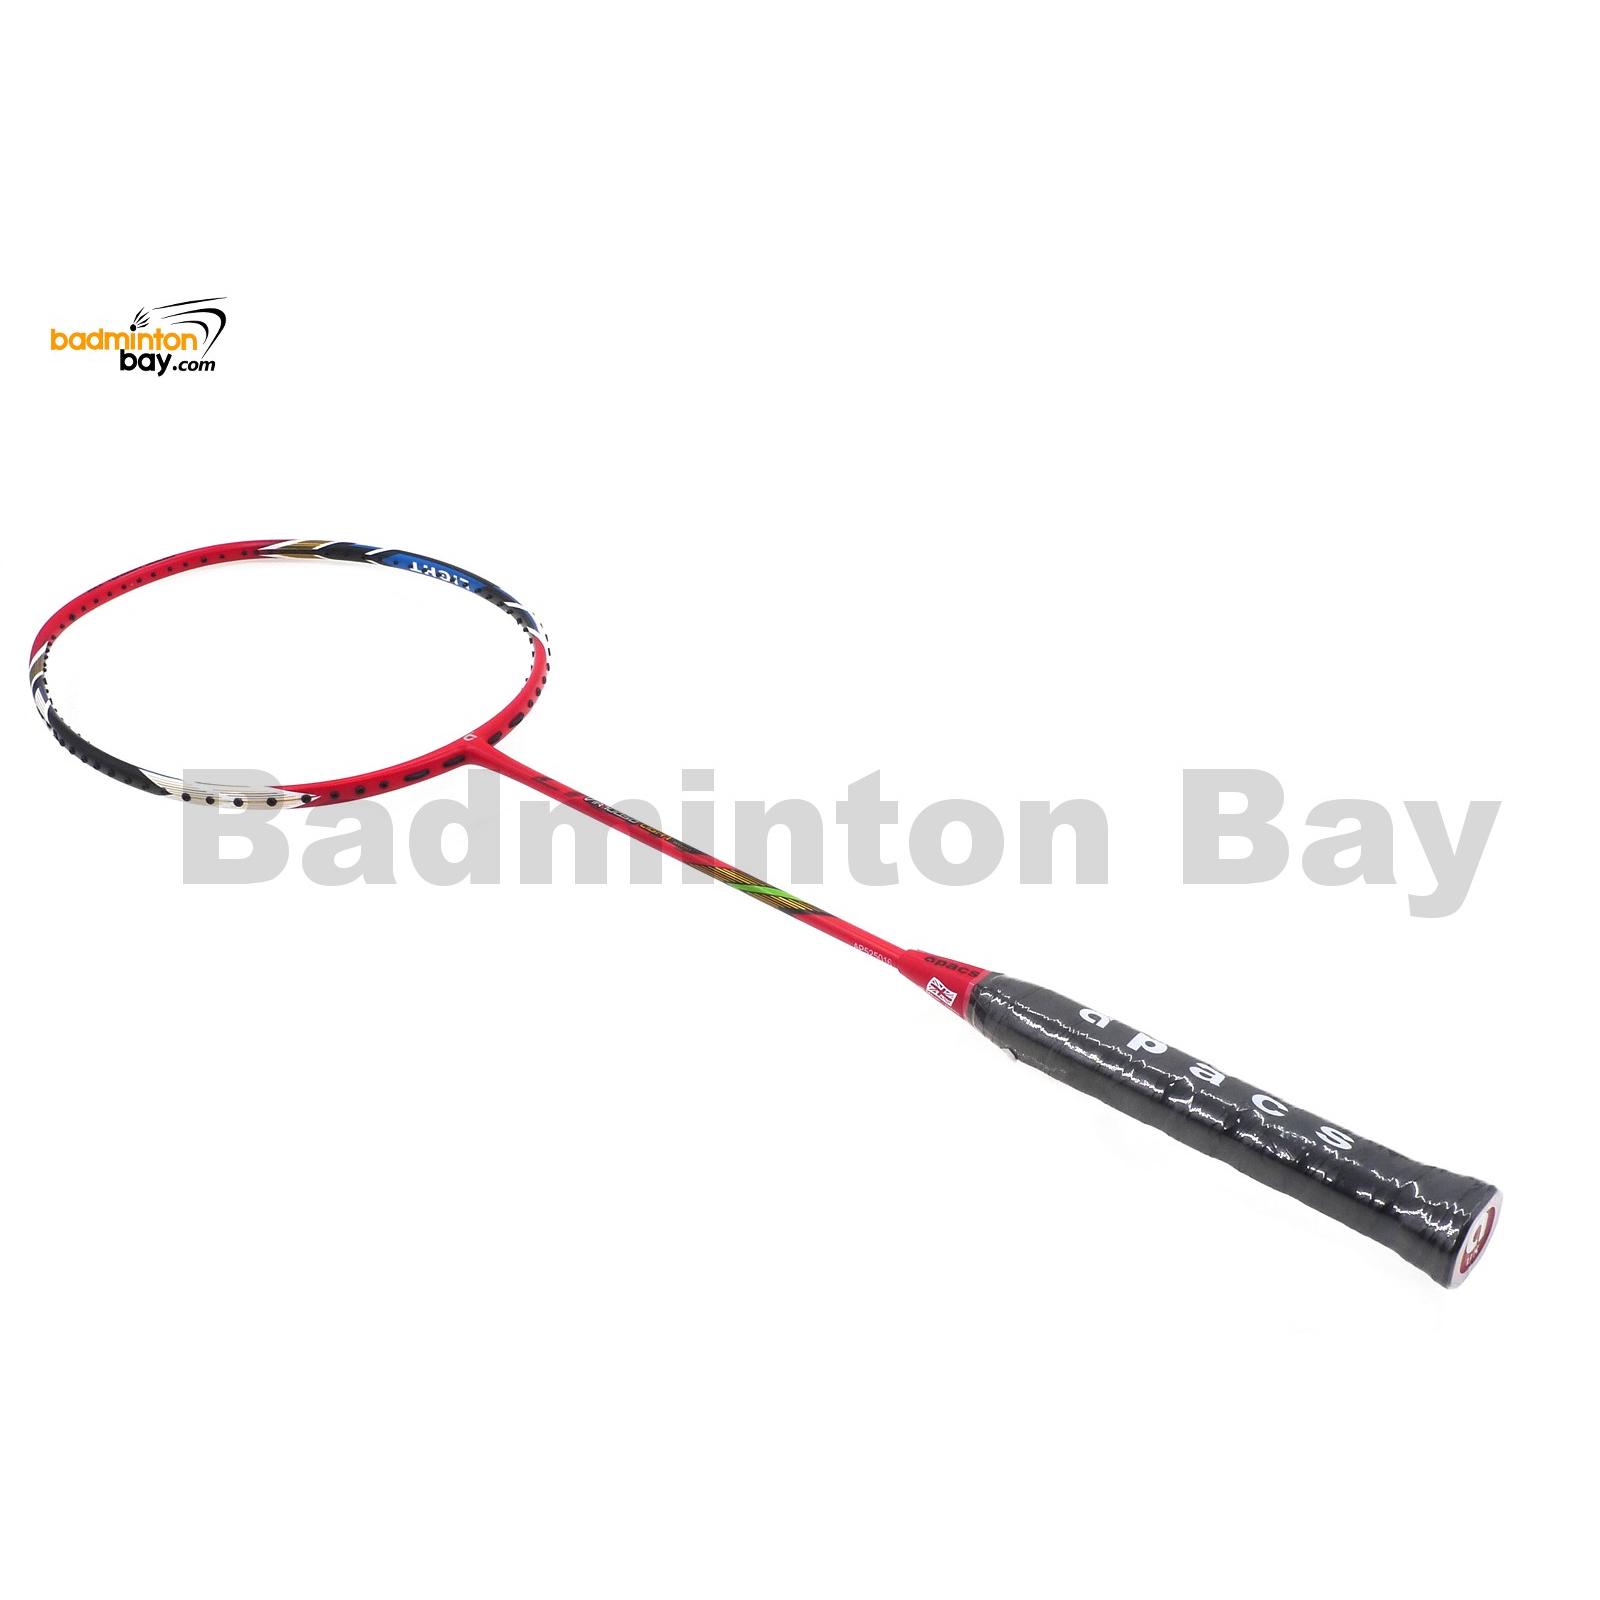 New Apacs Virtuoso Light Red 6U Badminton Racket Racquet Free Stringing Grip 